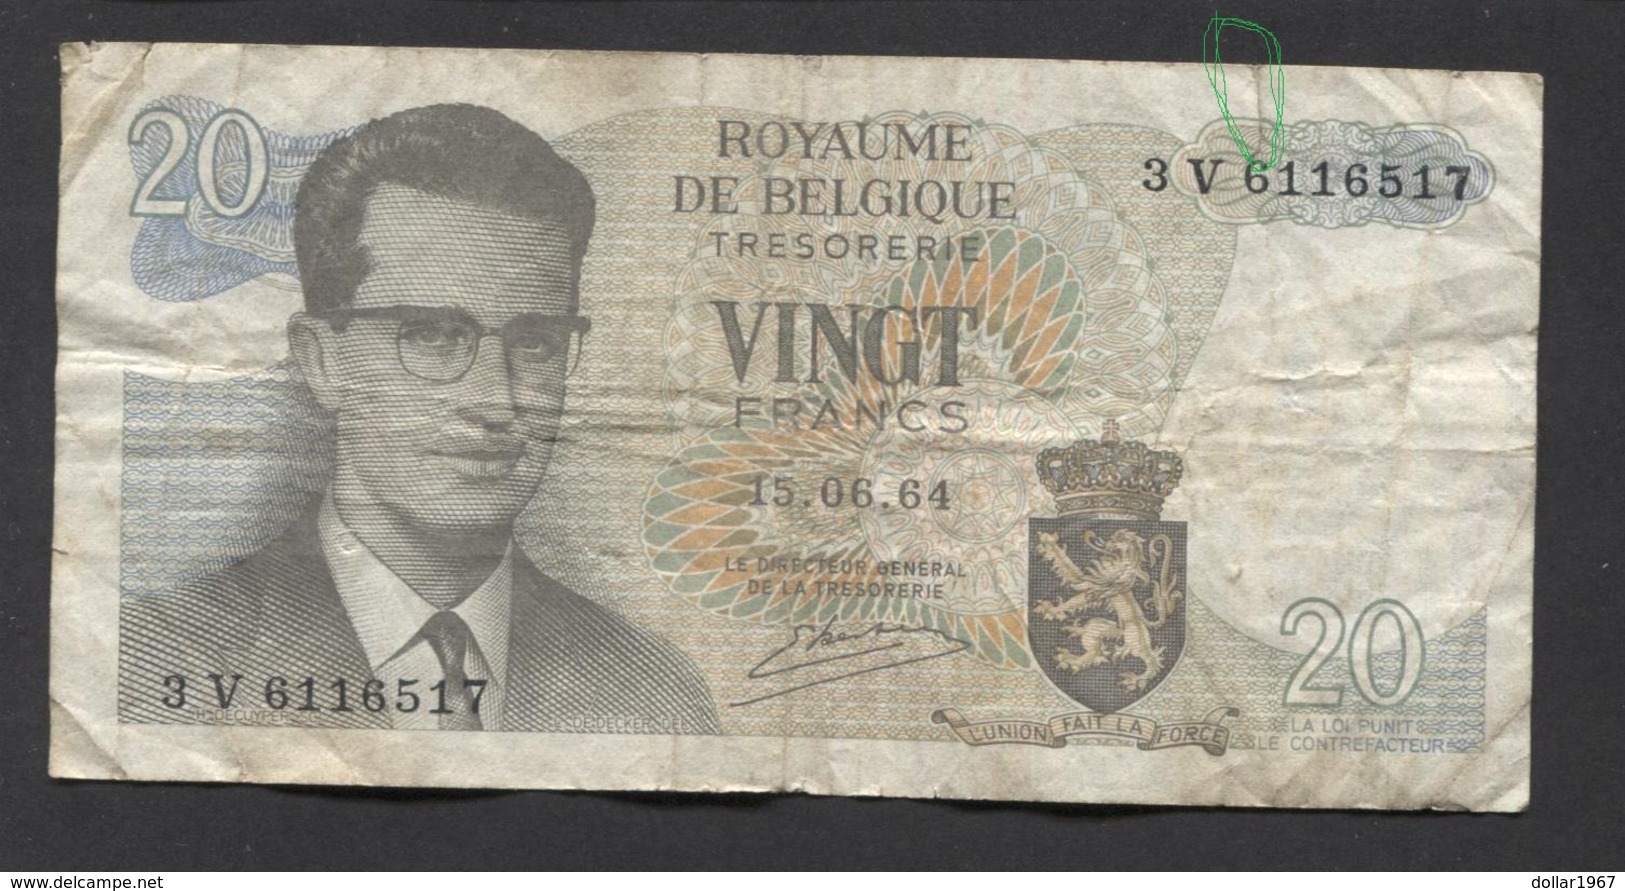 België Belgique Belgium 15 06 1964 -  20 Francs Atomium Baudouin. 3 V 6116317 - 20 Francos